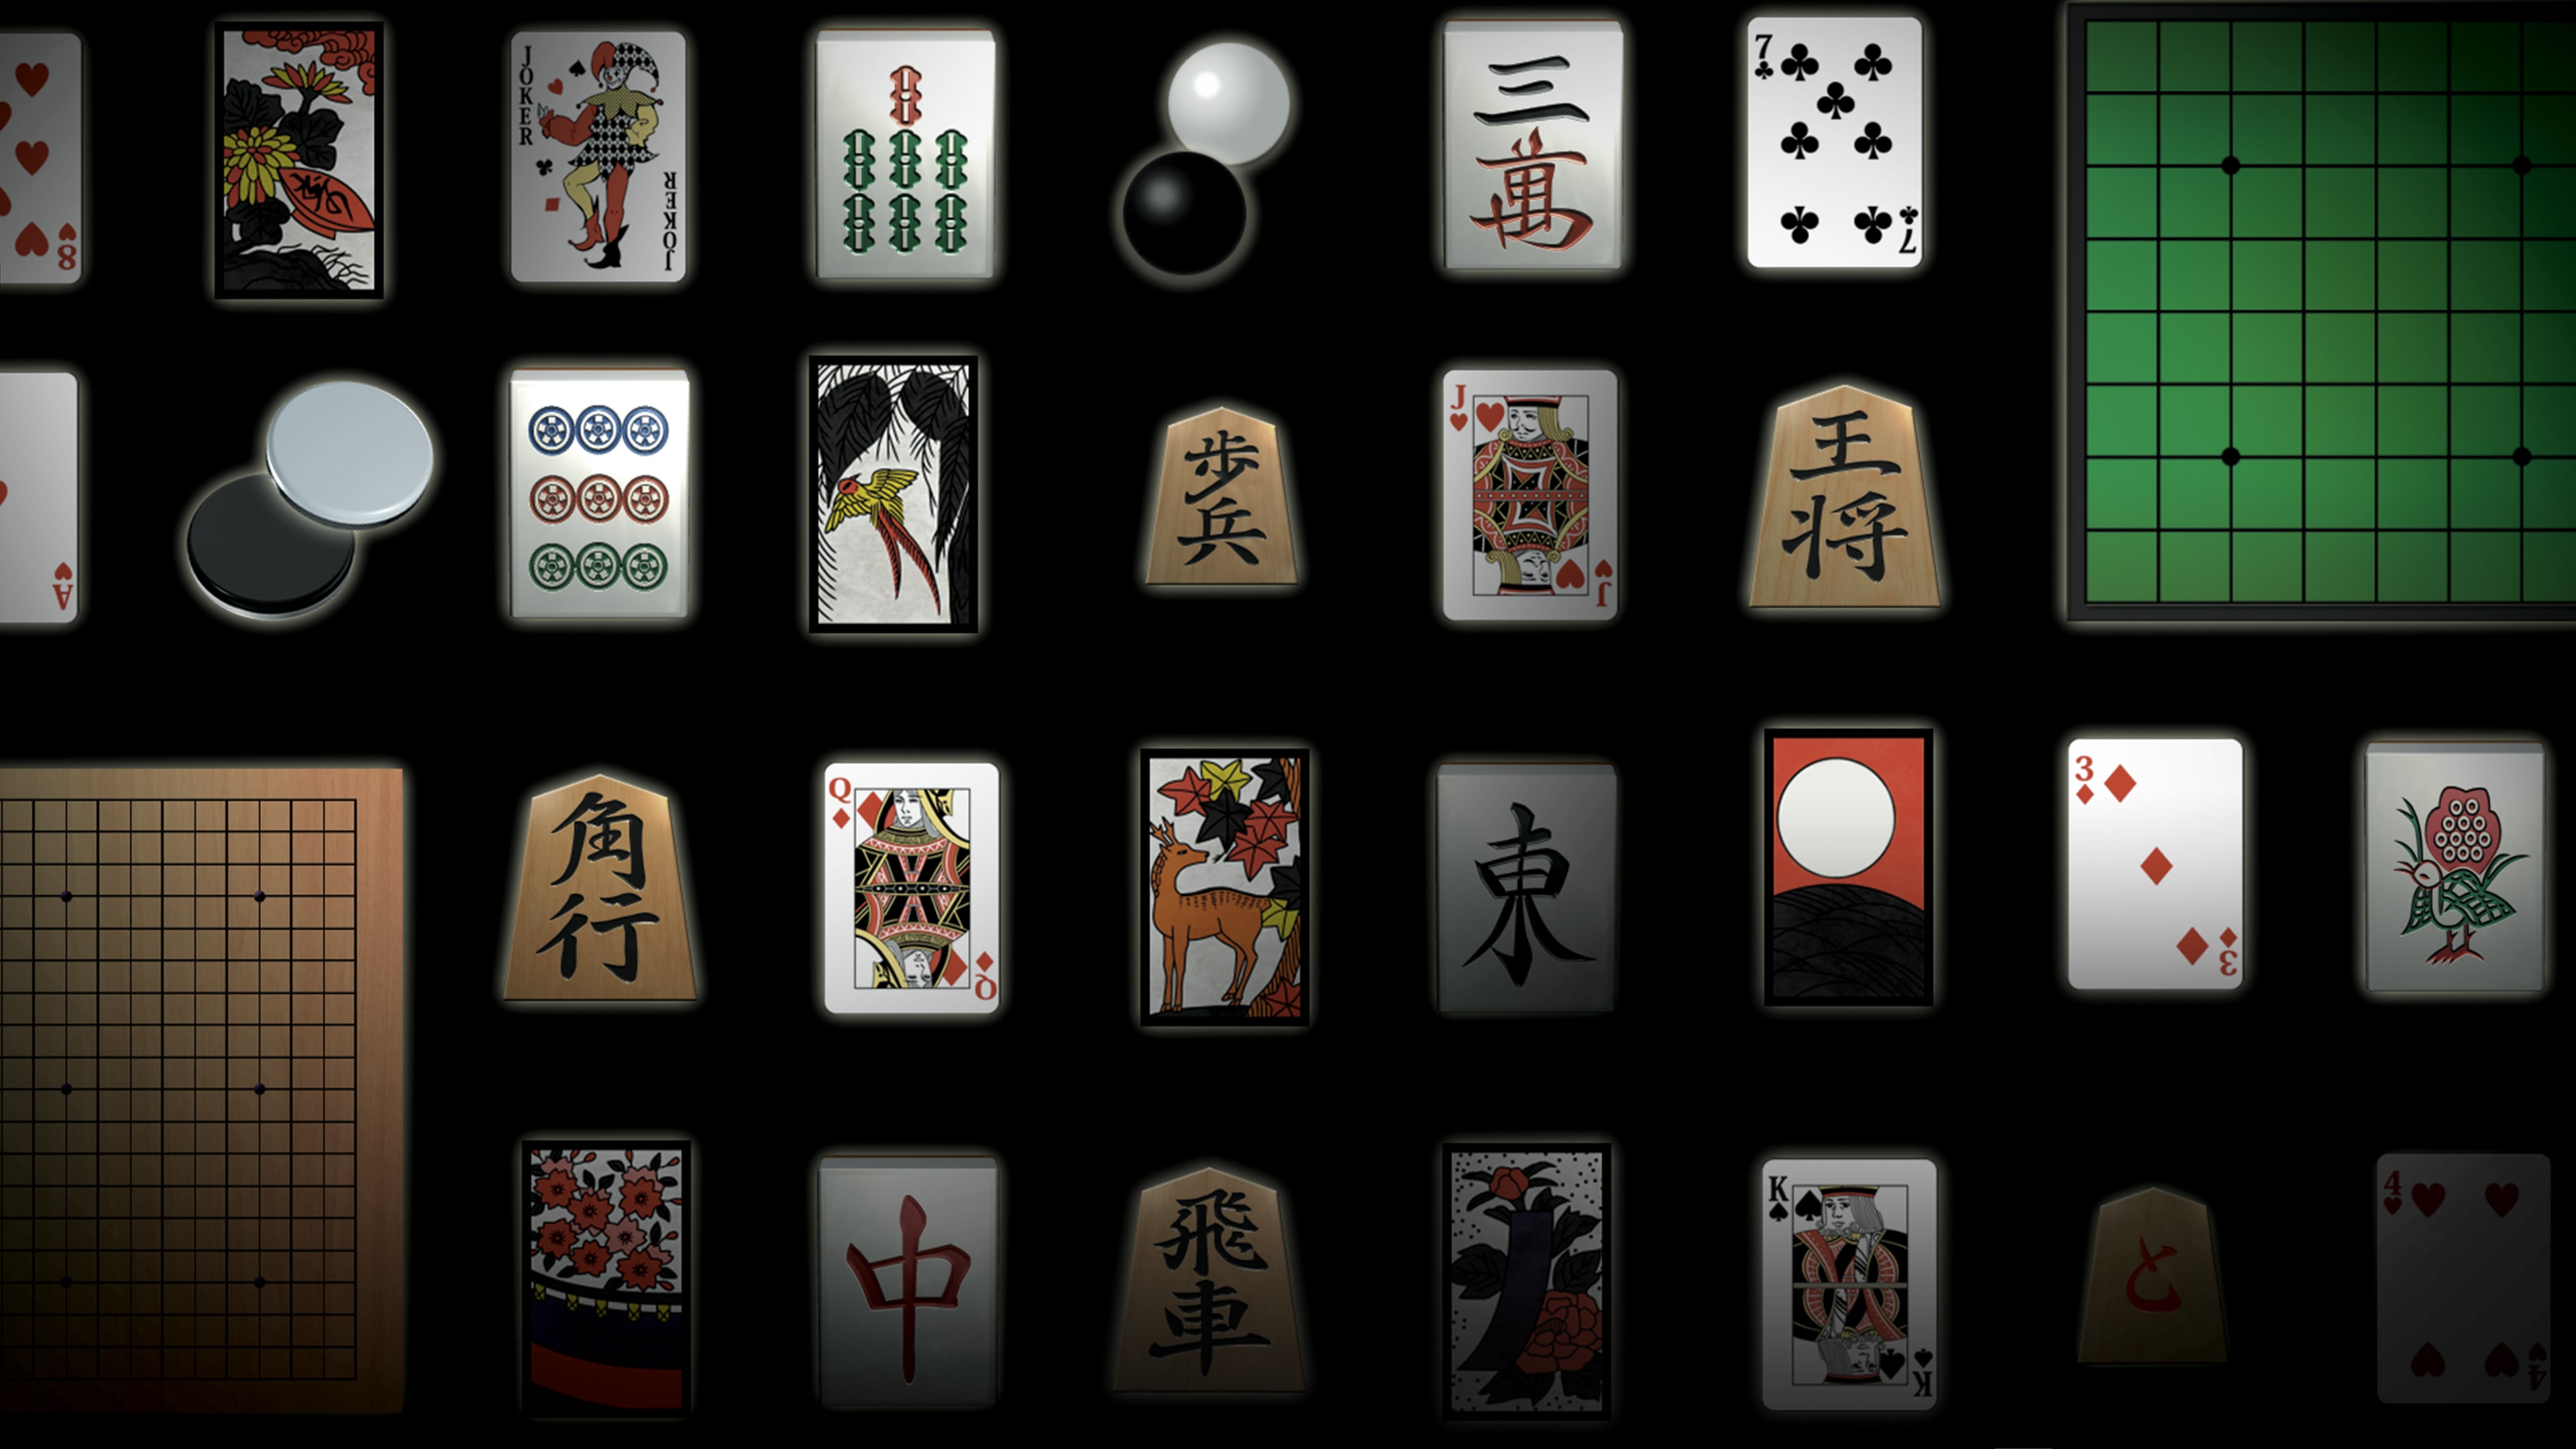 SIMPLEシリーズG4U Vol.2 THE テーブルゲーム Deluxe Pack ～麻雀・囲碁・将棋・詰将棋・オセロ・カード・